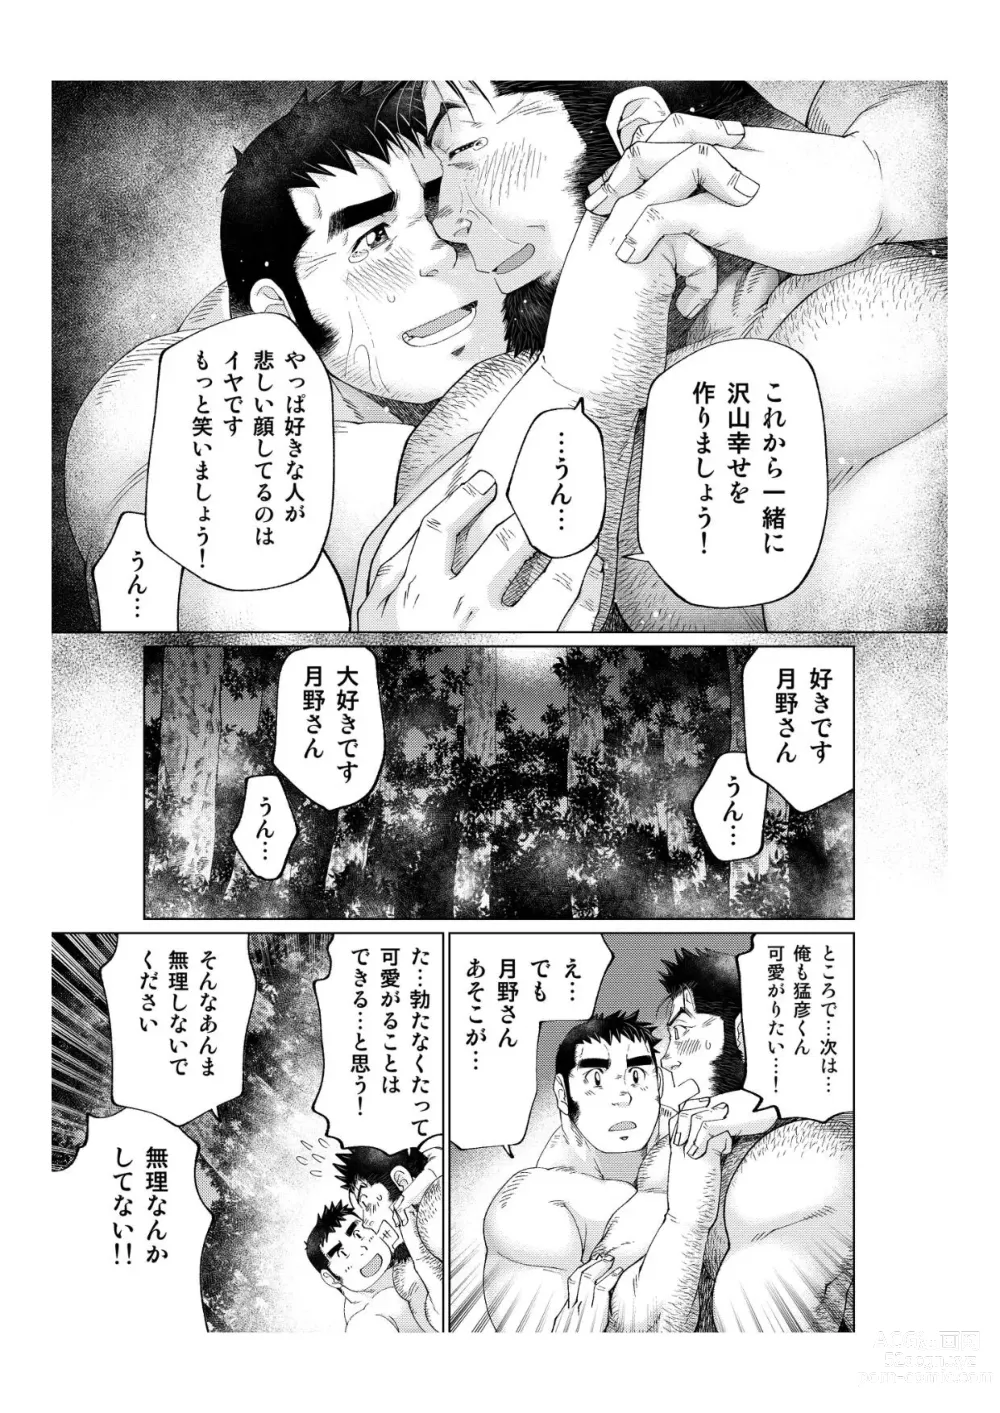 Page 56 of doujinshi Tsukinowaguma